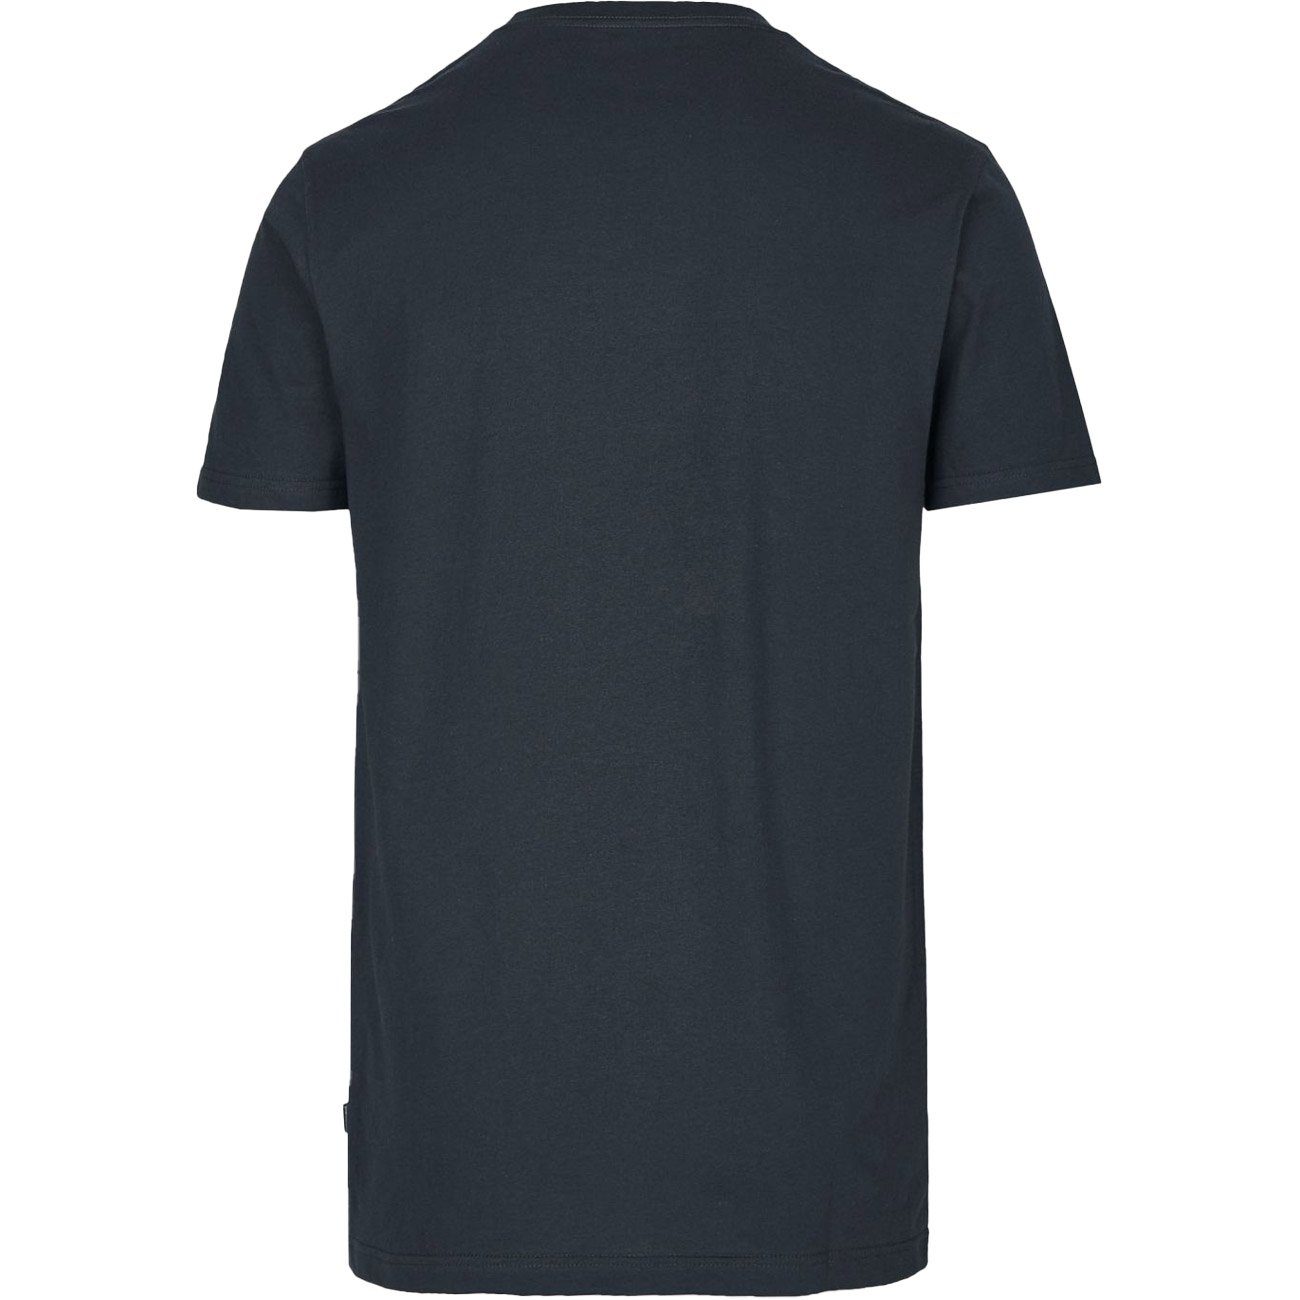 Cleptomanicx T-Shirt Ligull Regular blue mirage